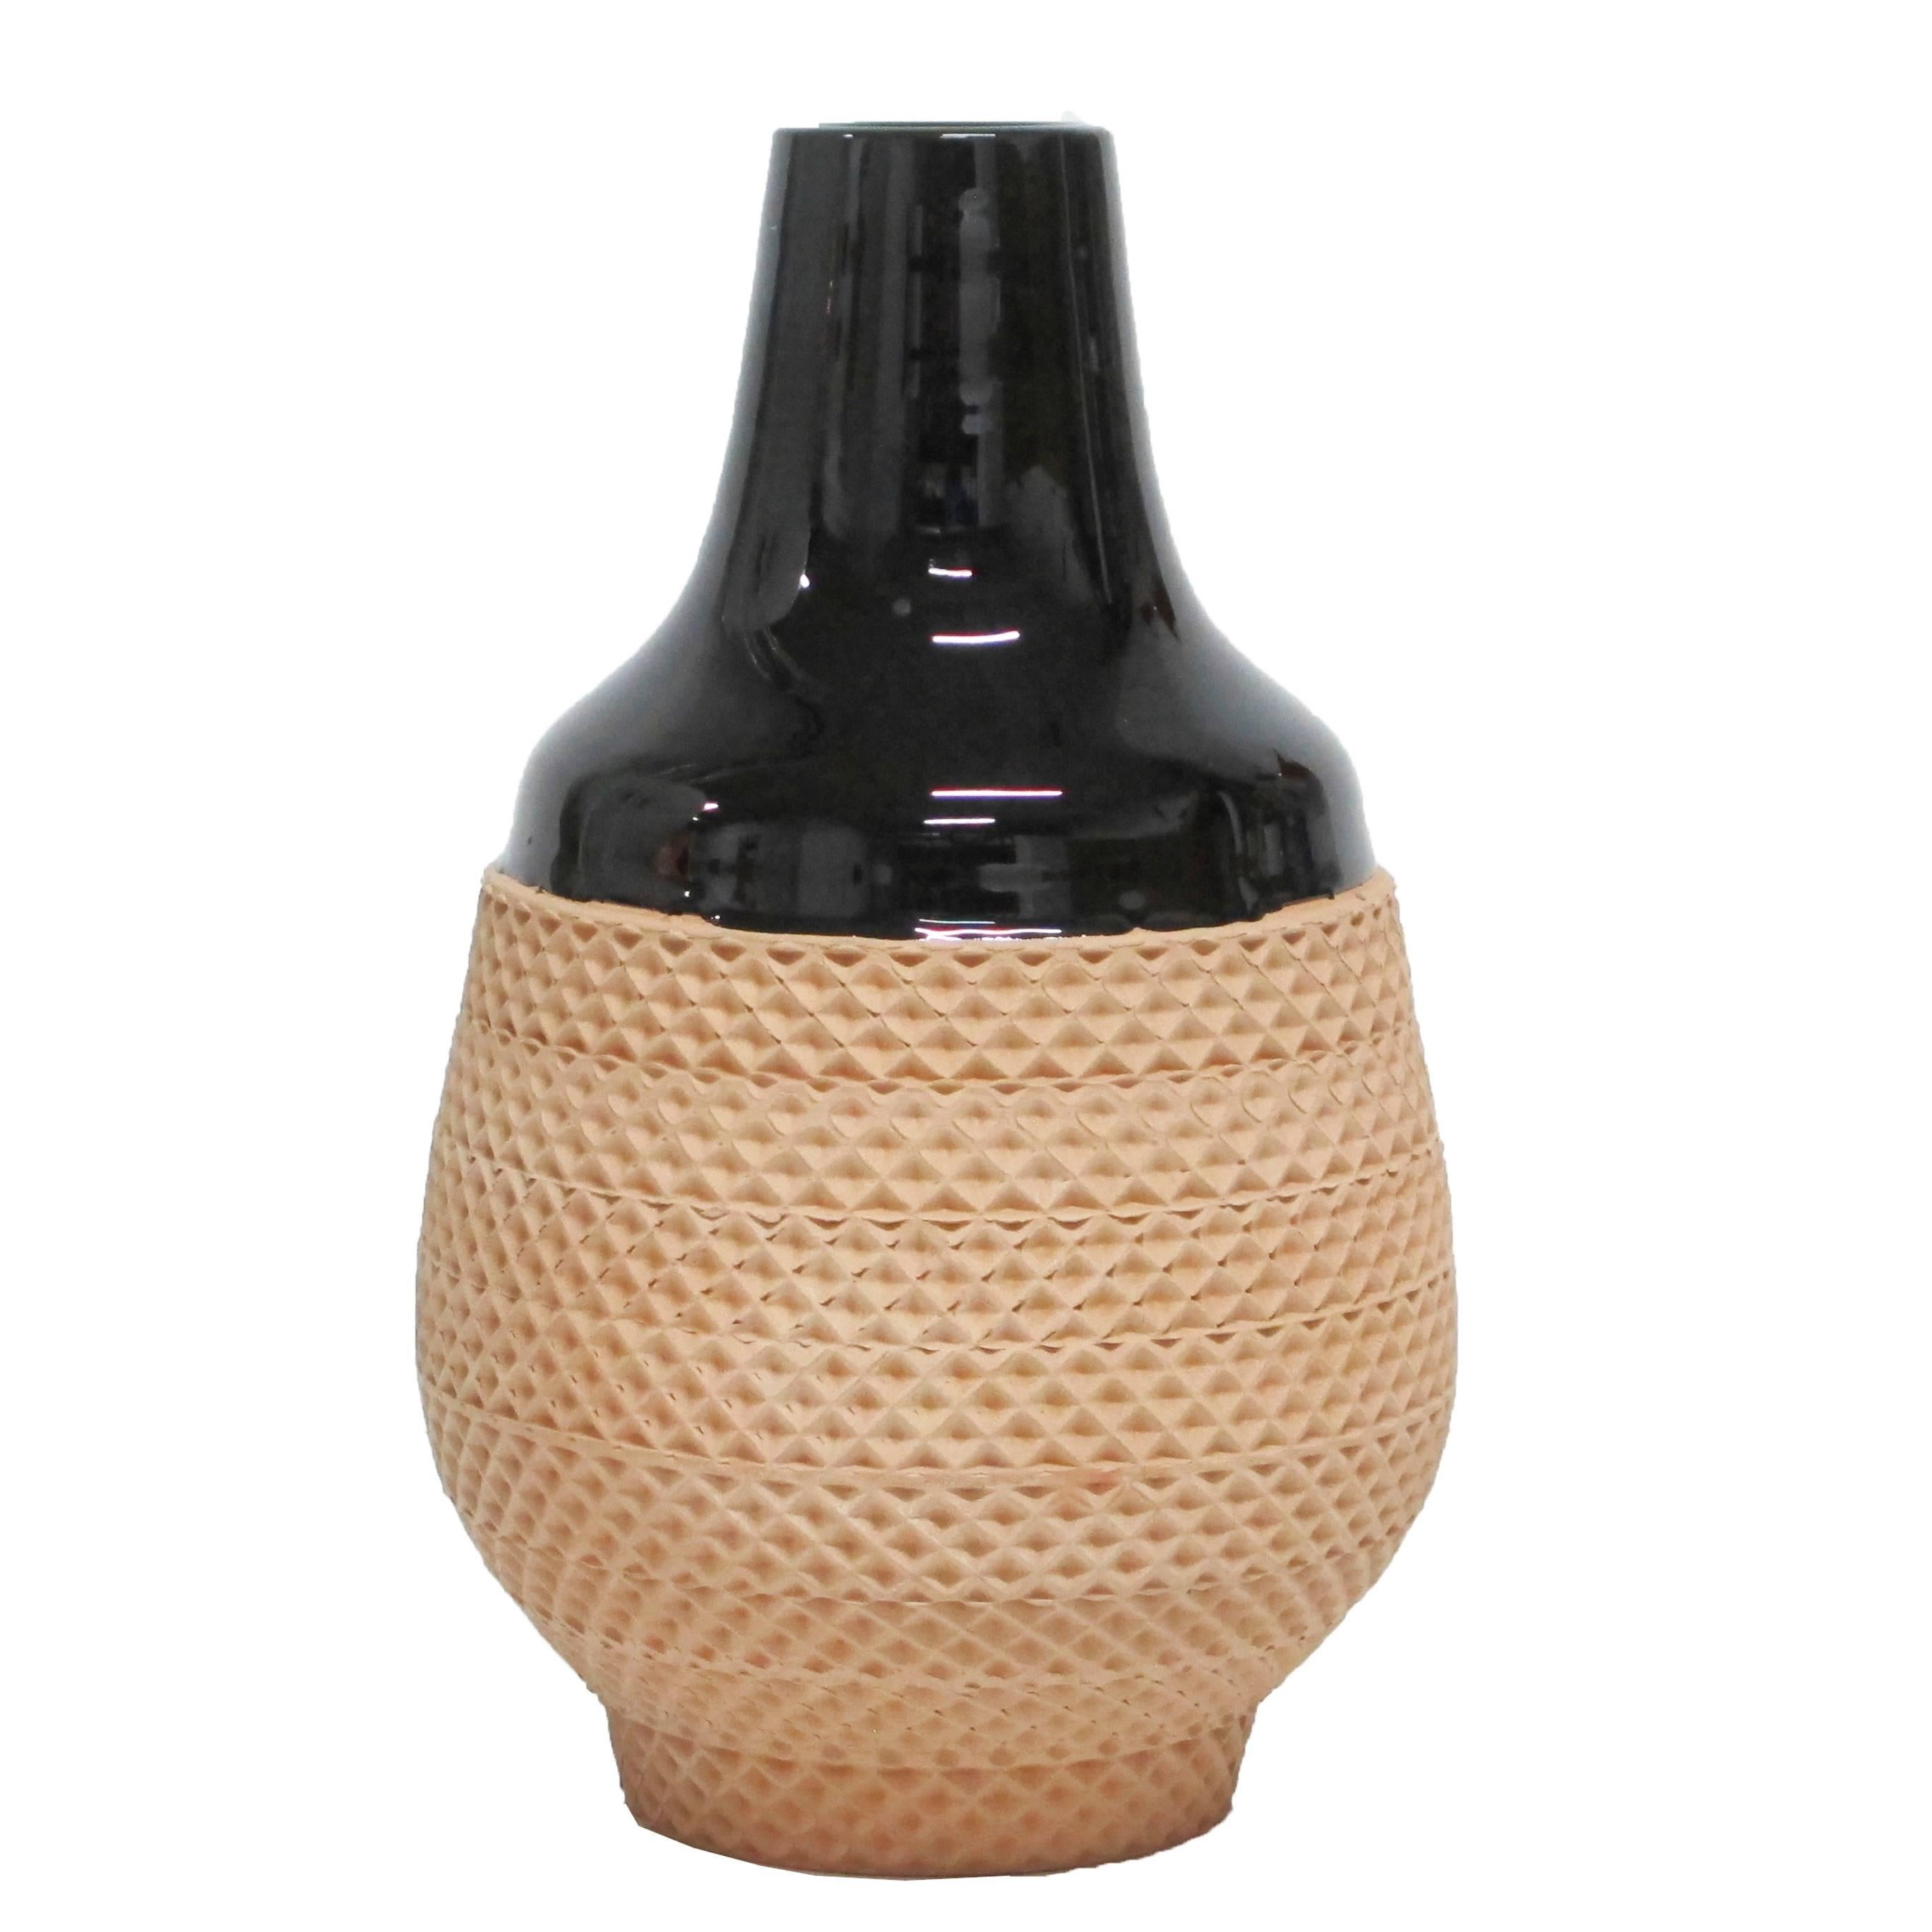 Glazed Bitossi Ceramic Vase Black Terracotta Impressed Textured Signed, Italy, 1970s